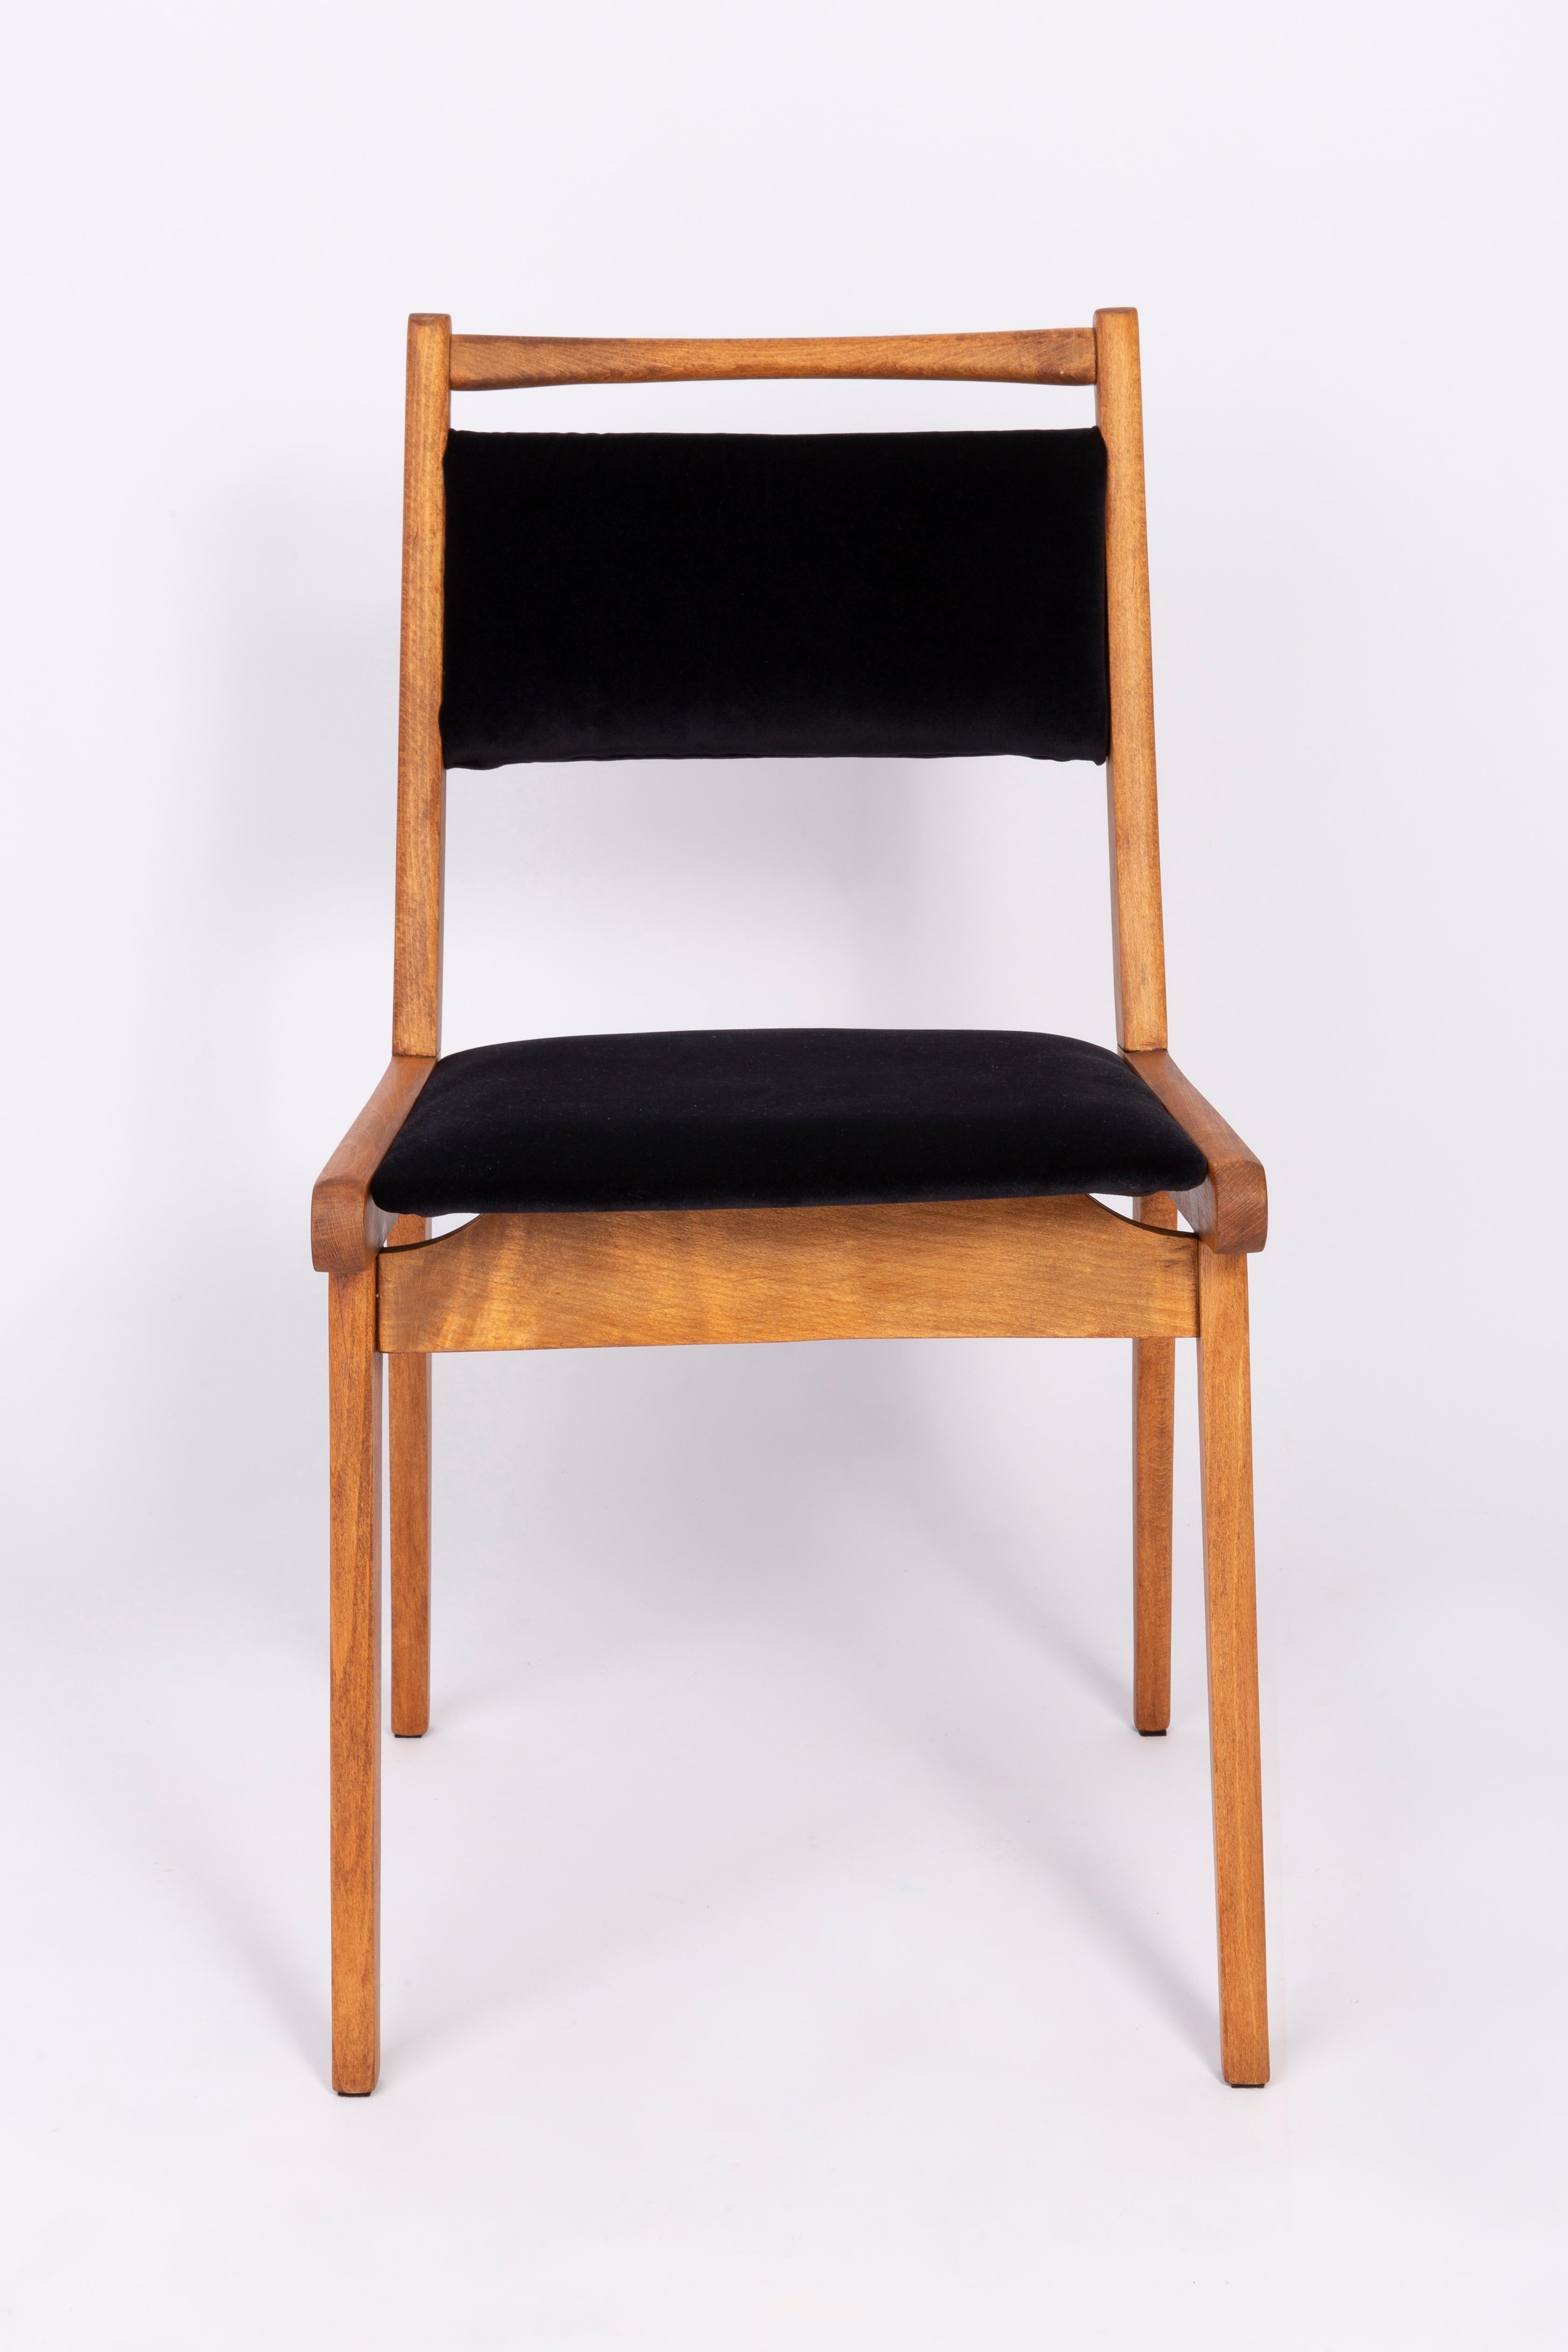 Set of Four 20th Century Black Velvet Chairs, Poland, 1960s For Sale 4